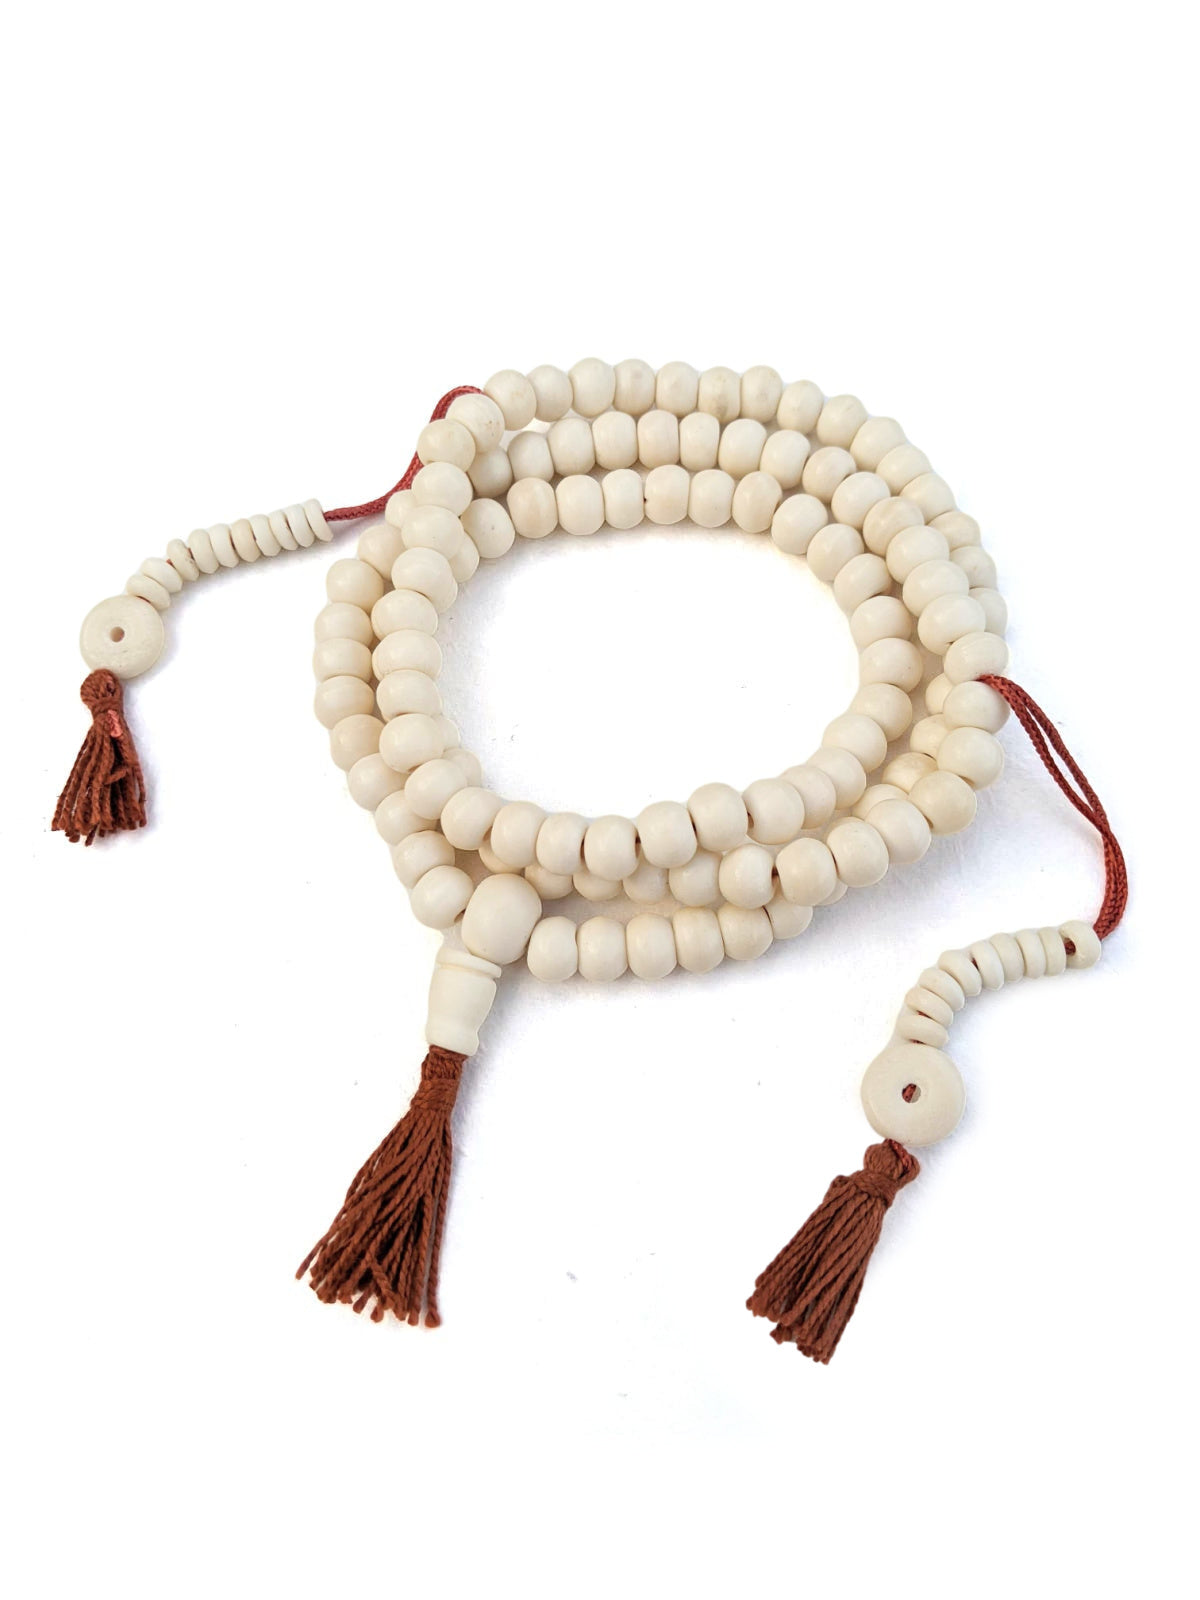 Yak Bone Prayer Beads